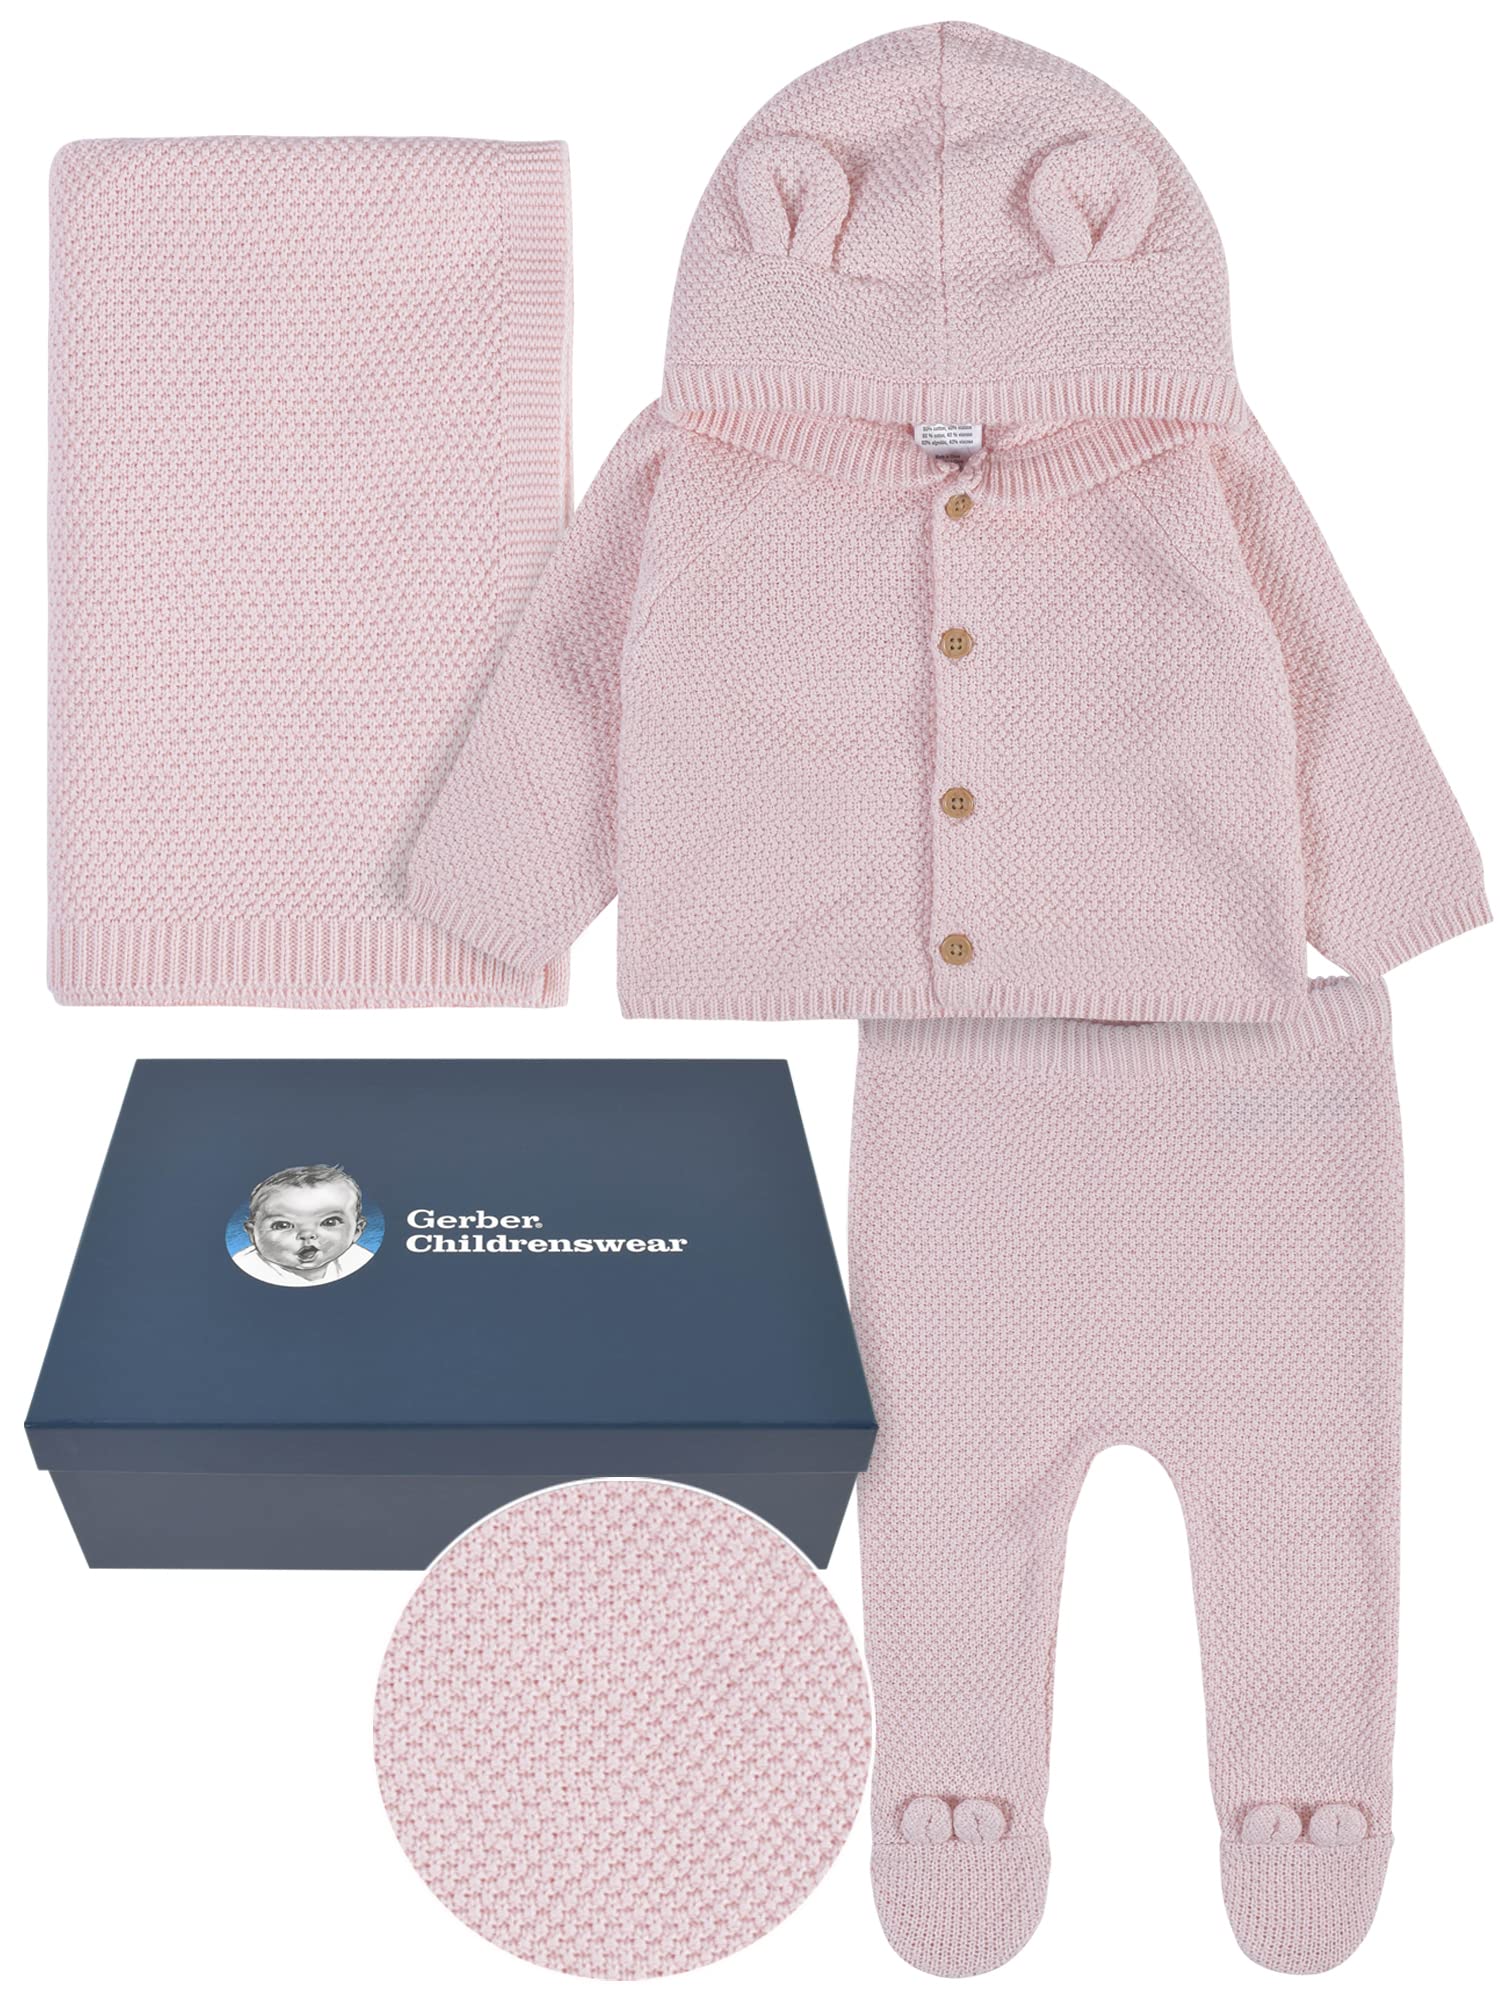 Gerber Unisex Baby 3-Piece Knit Clothing Gift Set Pink Newborn